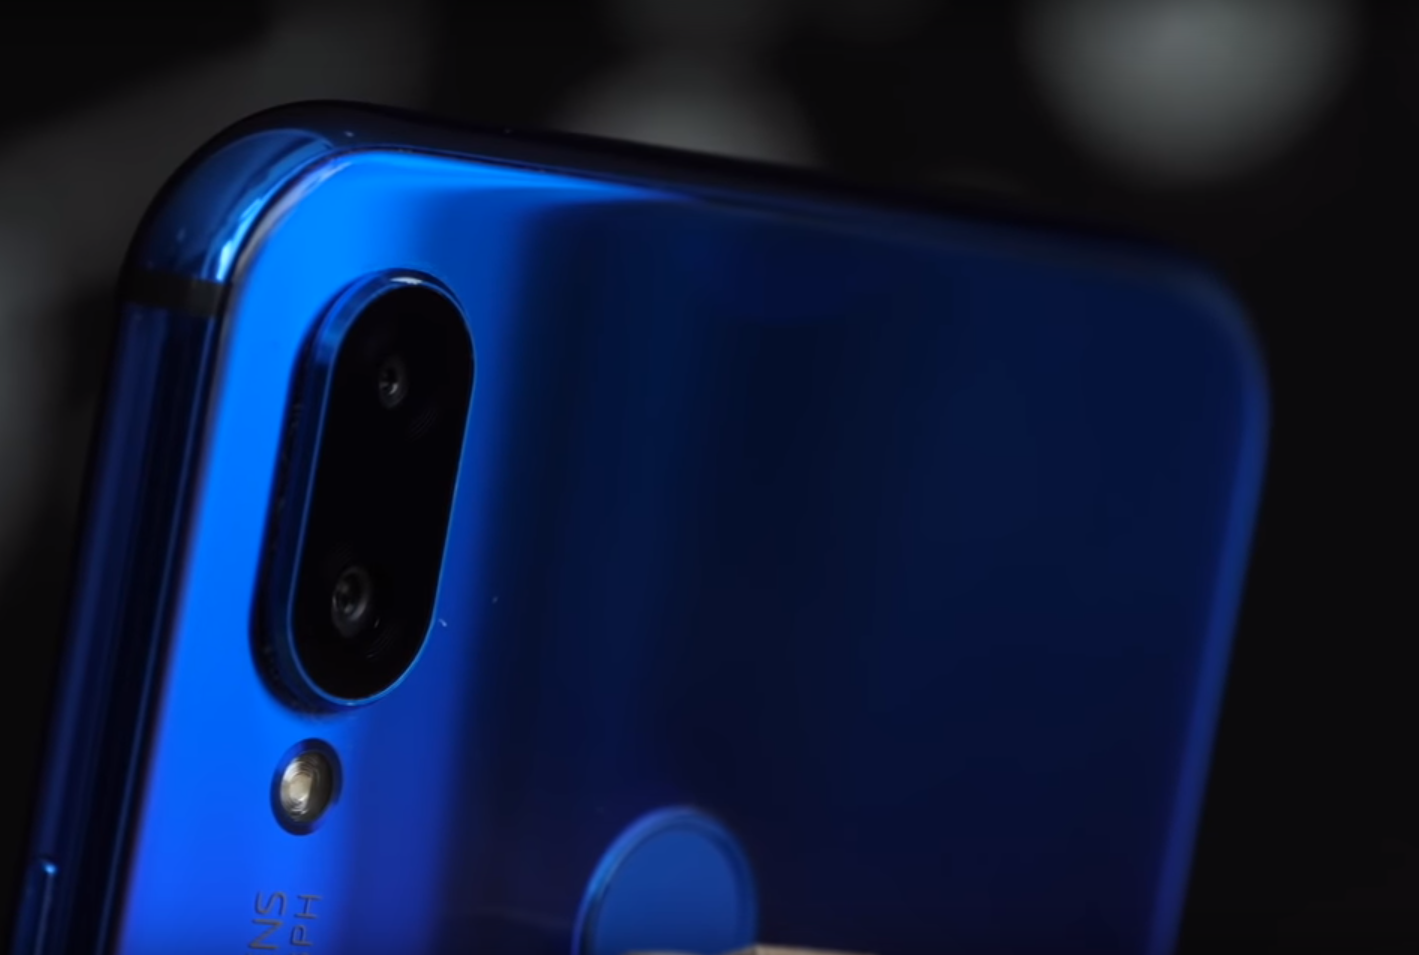 Smartphone Huawei P Smart (2019) - πλεονεκτήματα και μειονεκτήματα